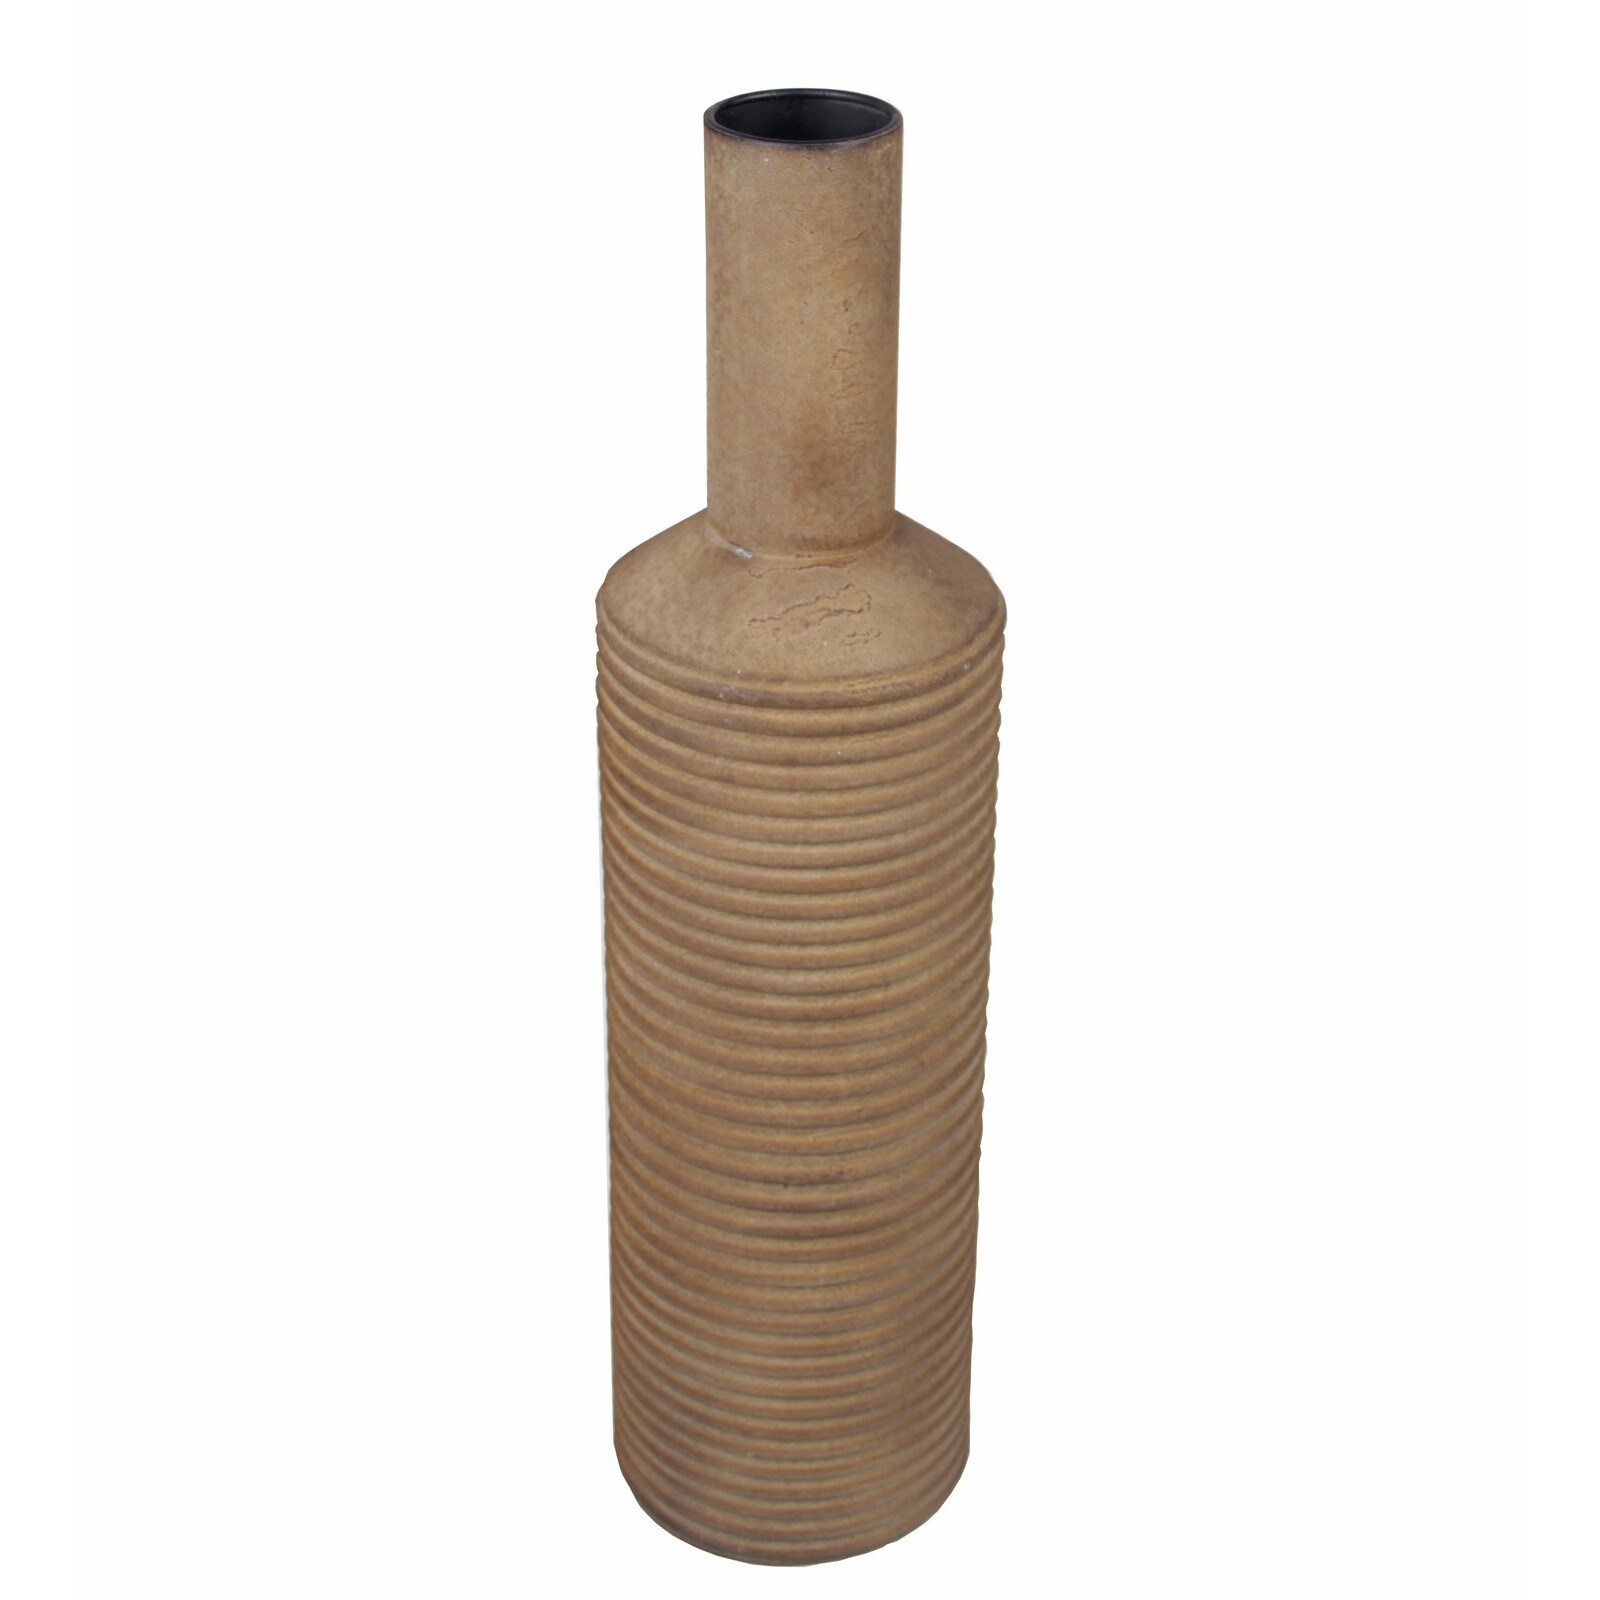 Privilege 33 inch Rustic Brown Ceramic Vase